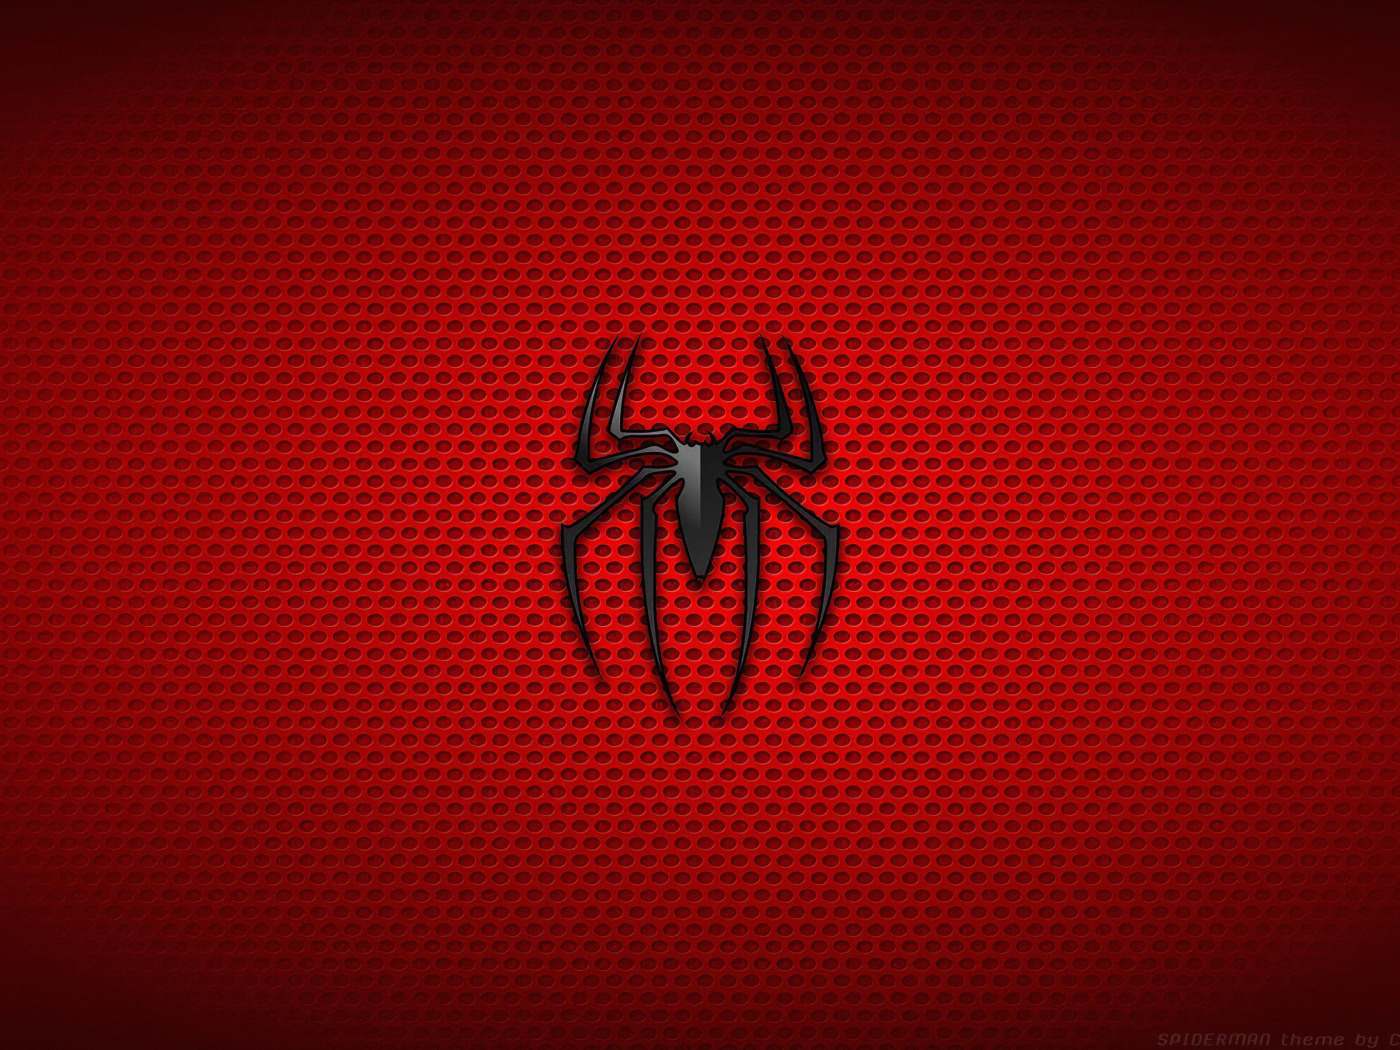 Download wallpaper Logo, Background, Spiderman, section minimalism in  resolution 1400x1050